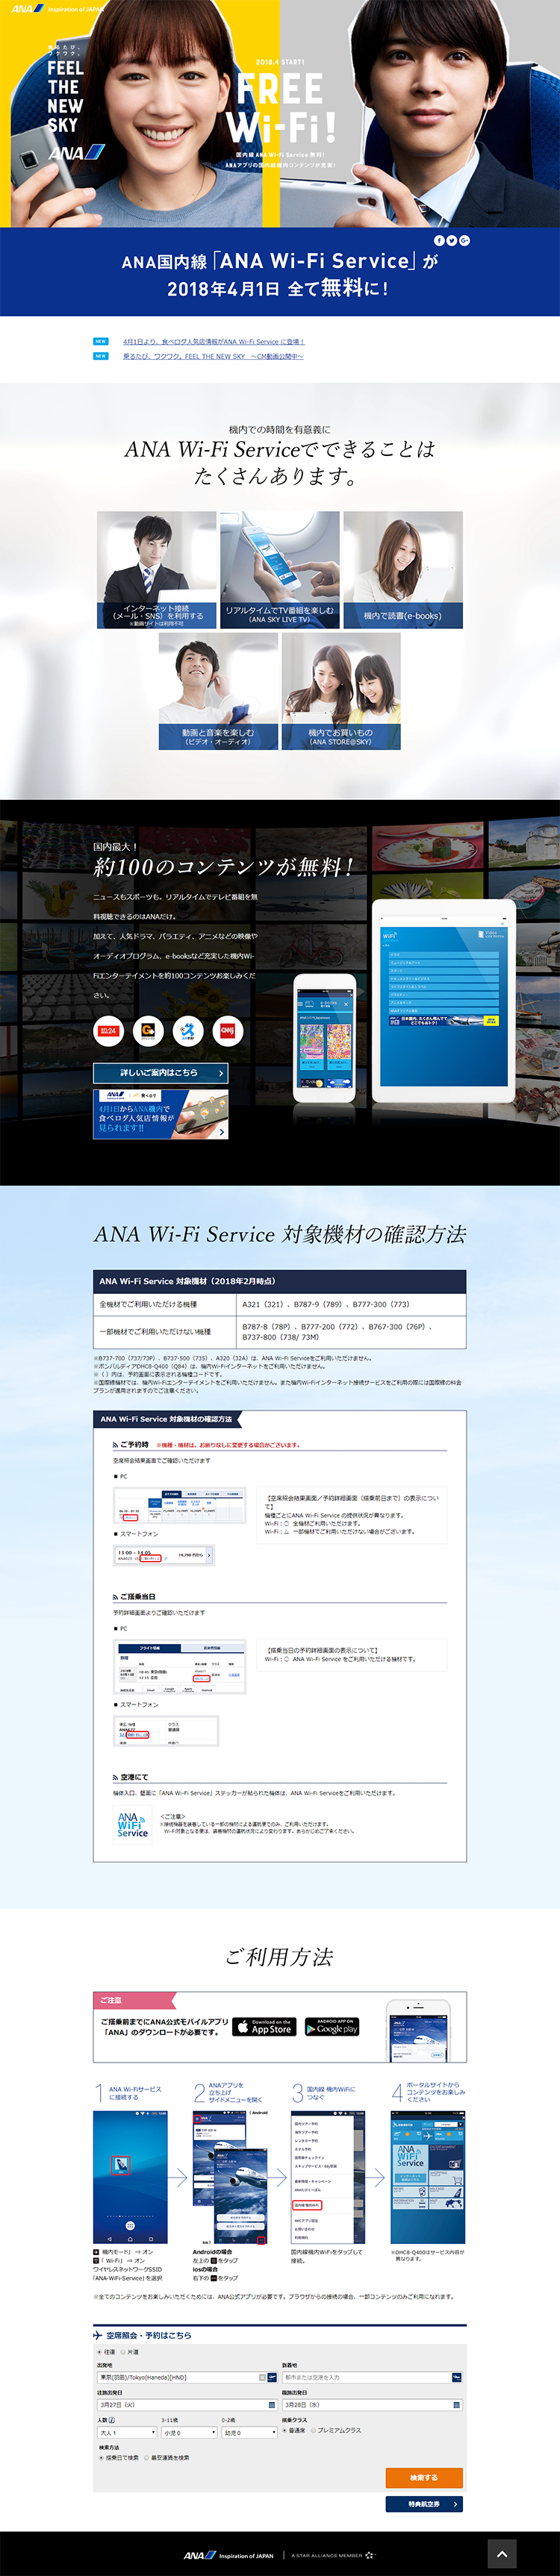 ANA Wi-Fi Service_pc_1